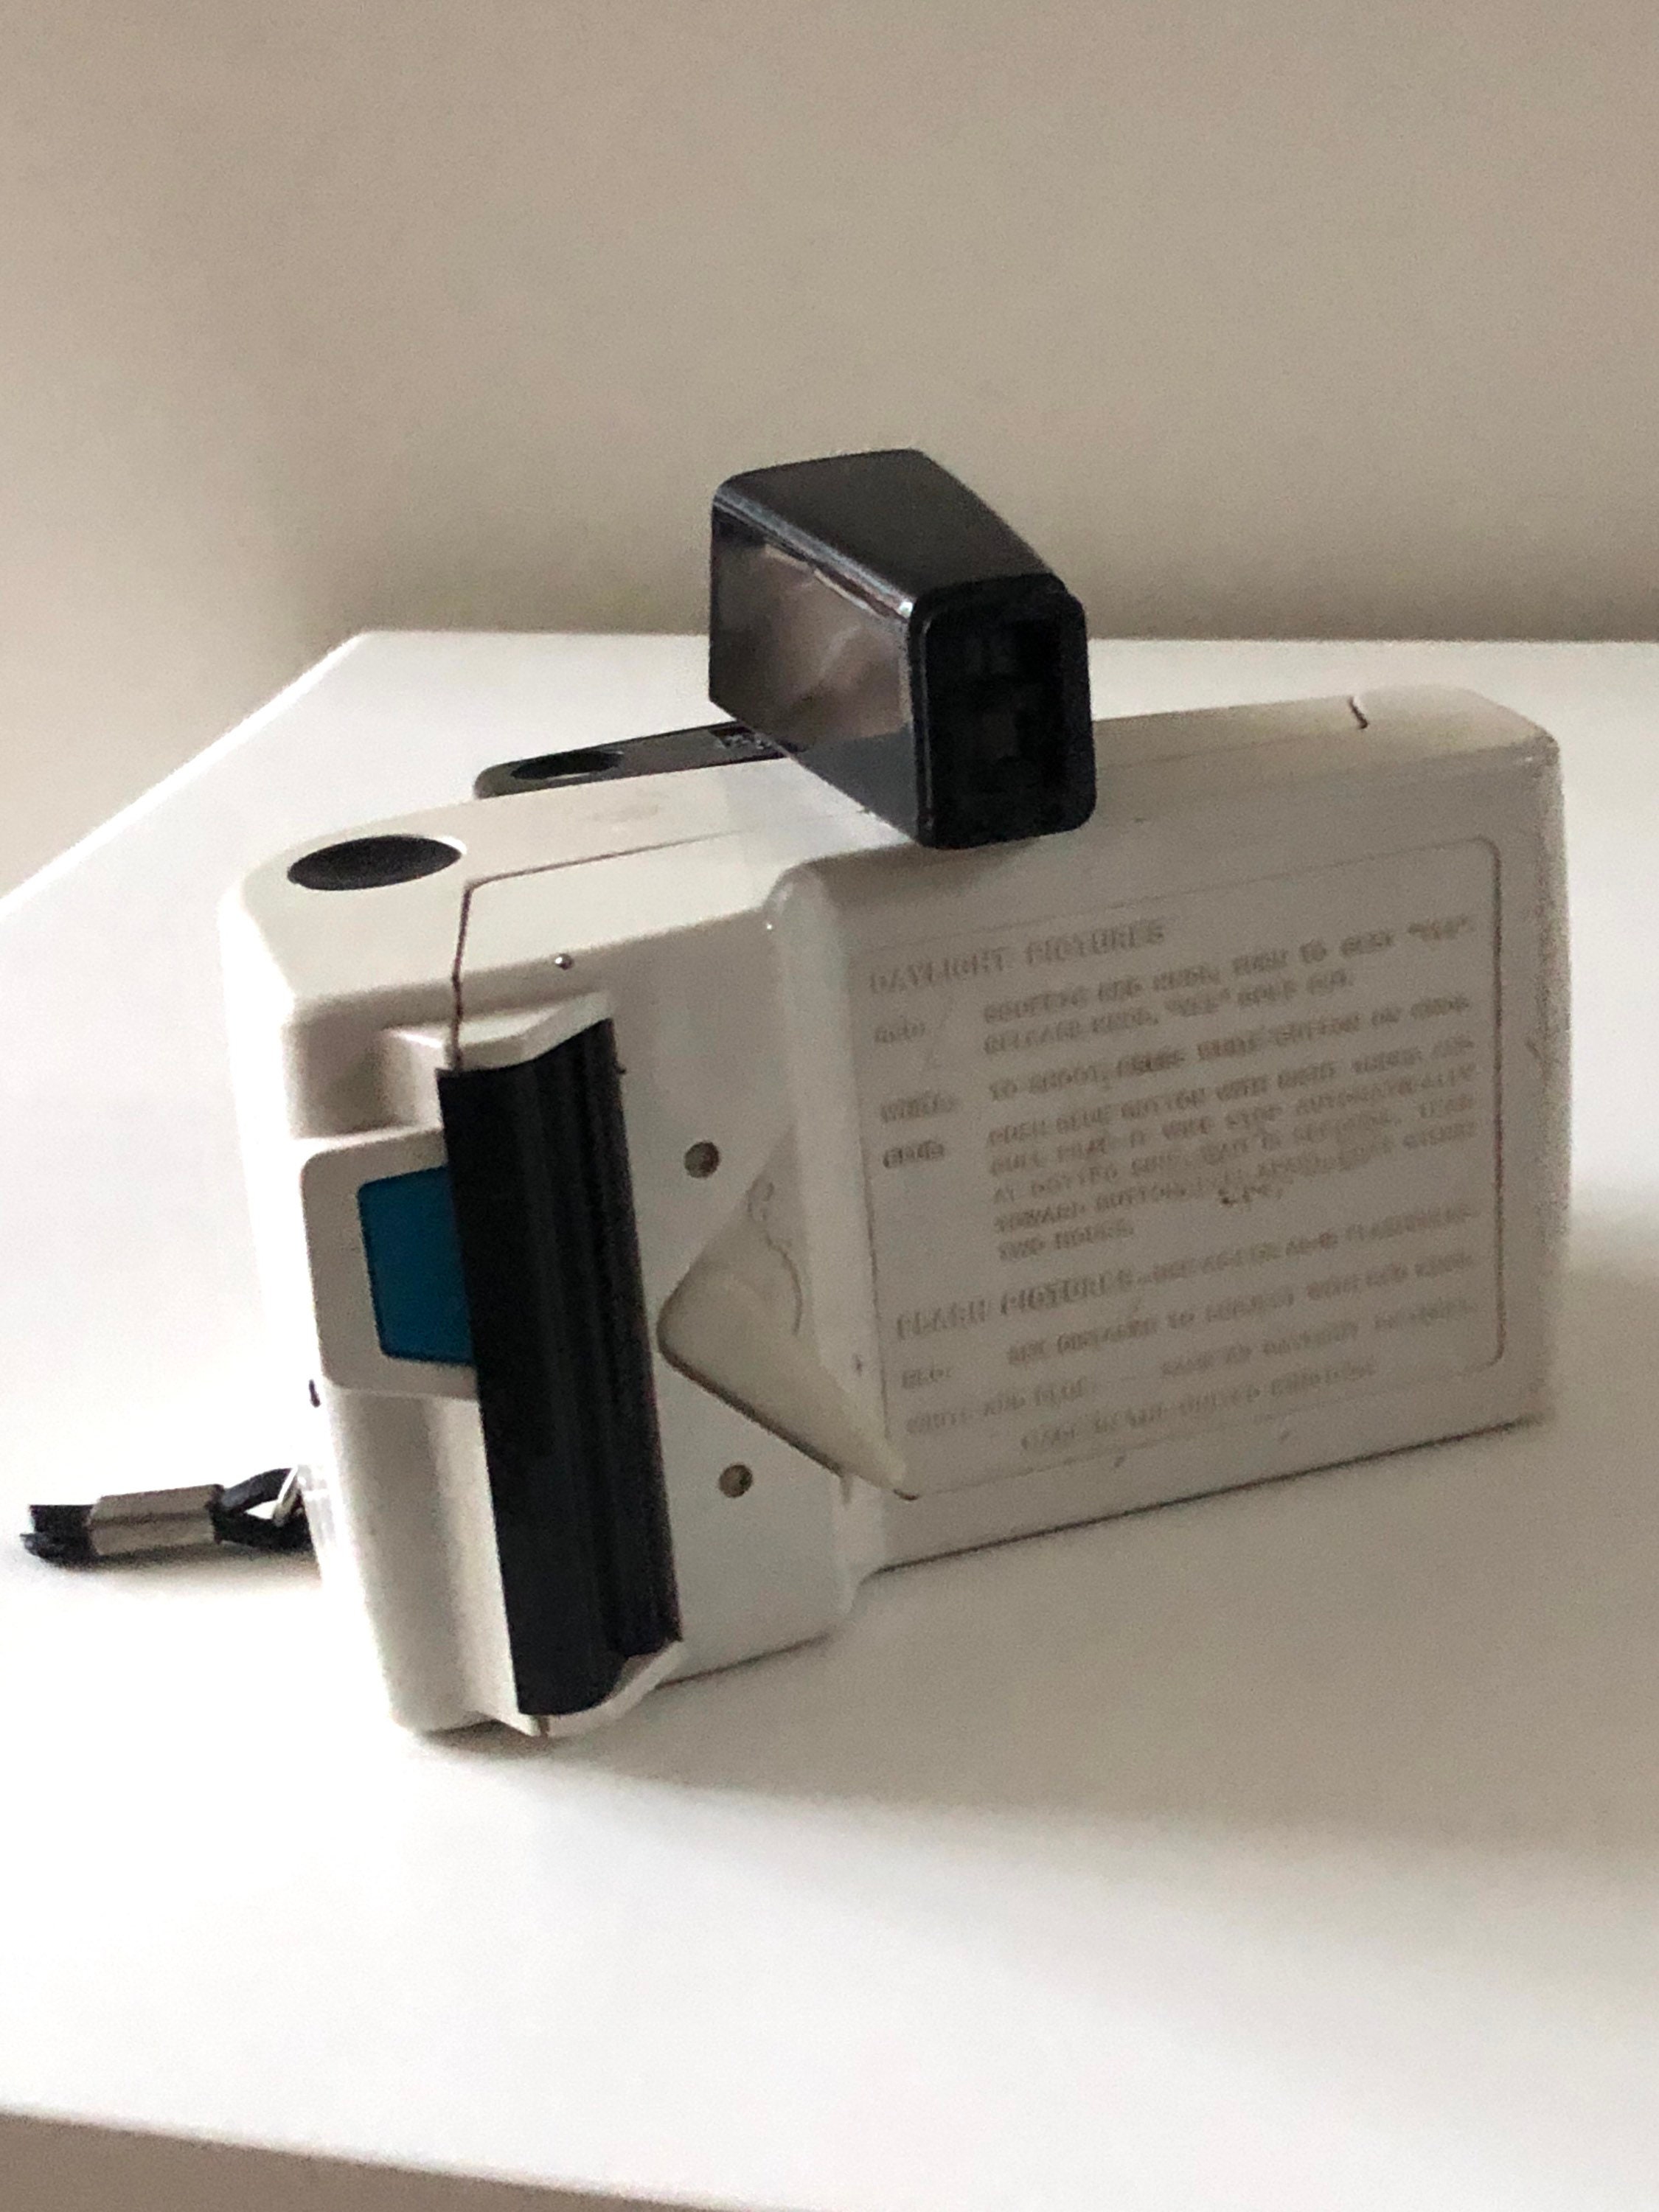 the swinger polaroid camera 1960 s